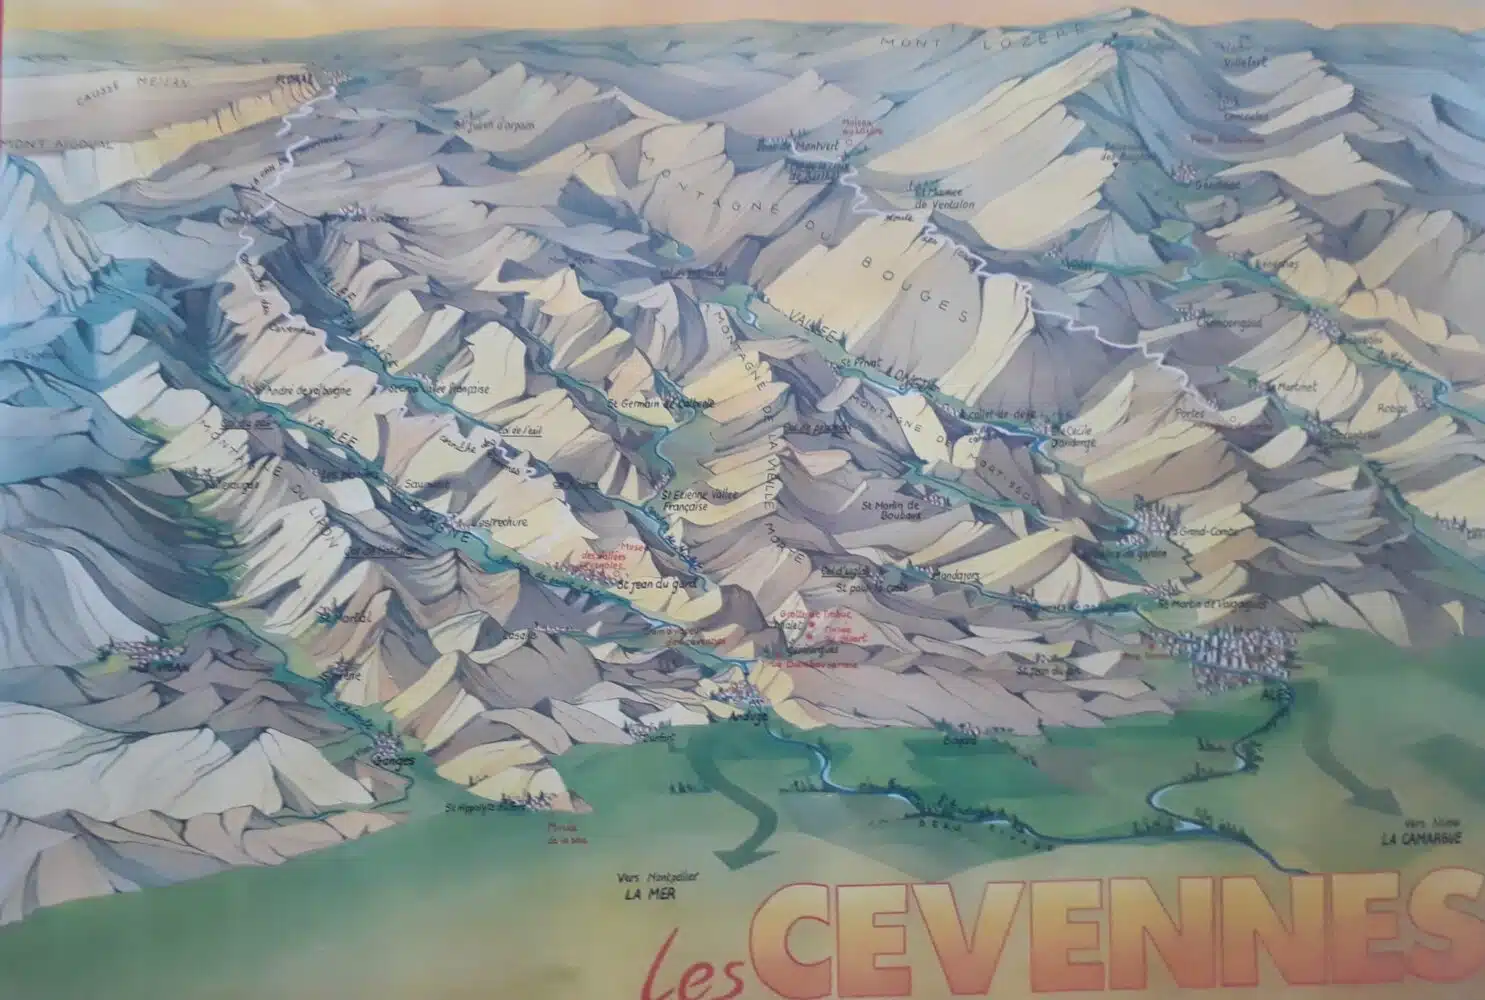 You are currently viewing Les vallées cévenoles